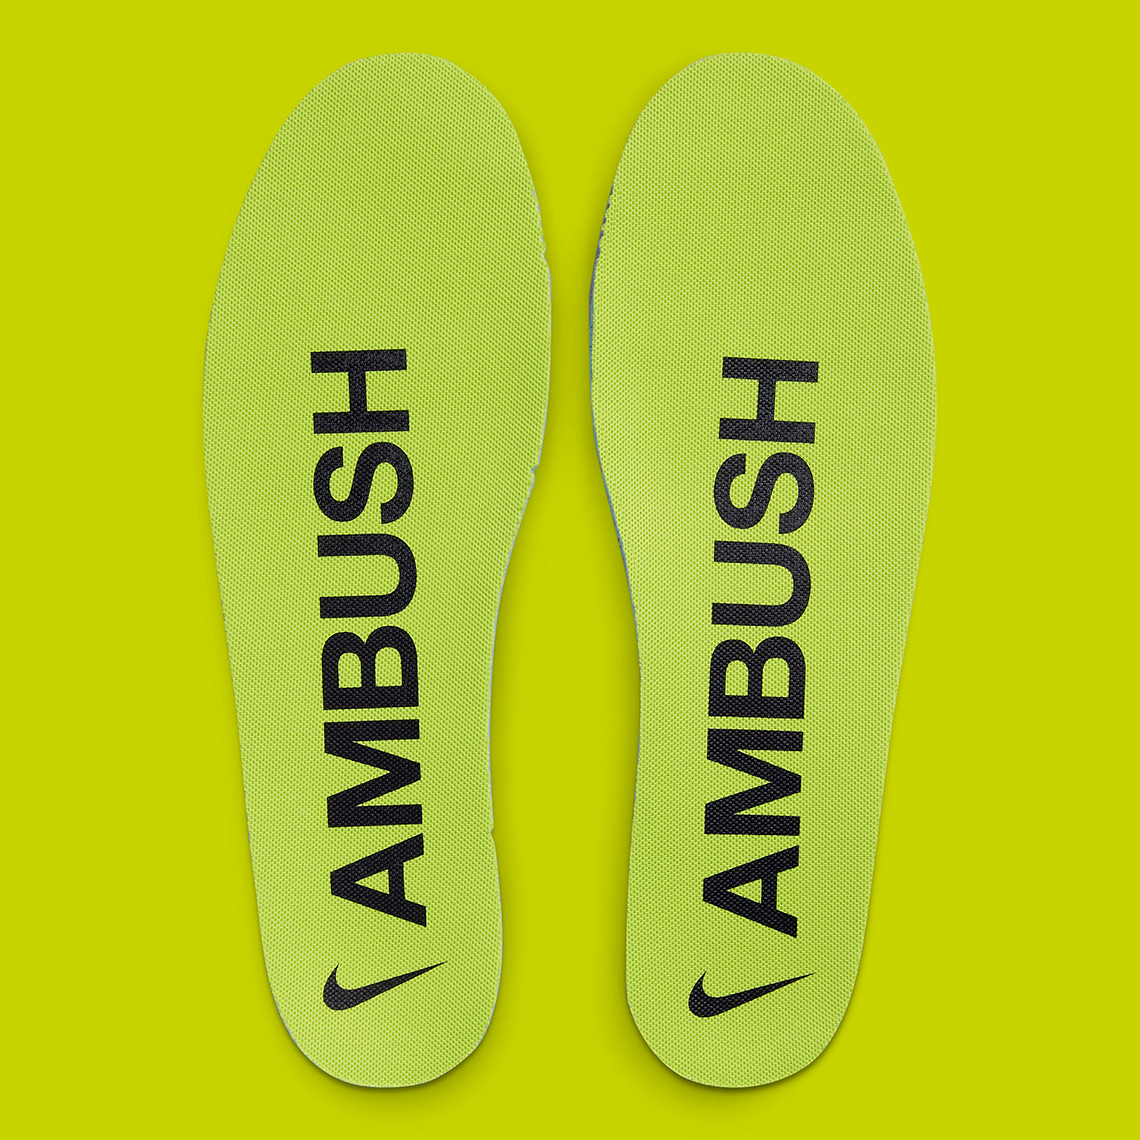 Ambush Nike lebron soccer boots in lagos india women fashion Atomic Green Cu7544 300 Release Date 10